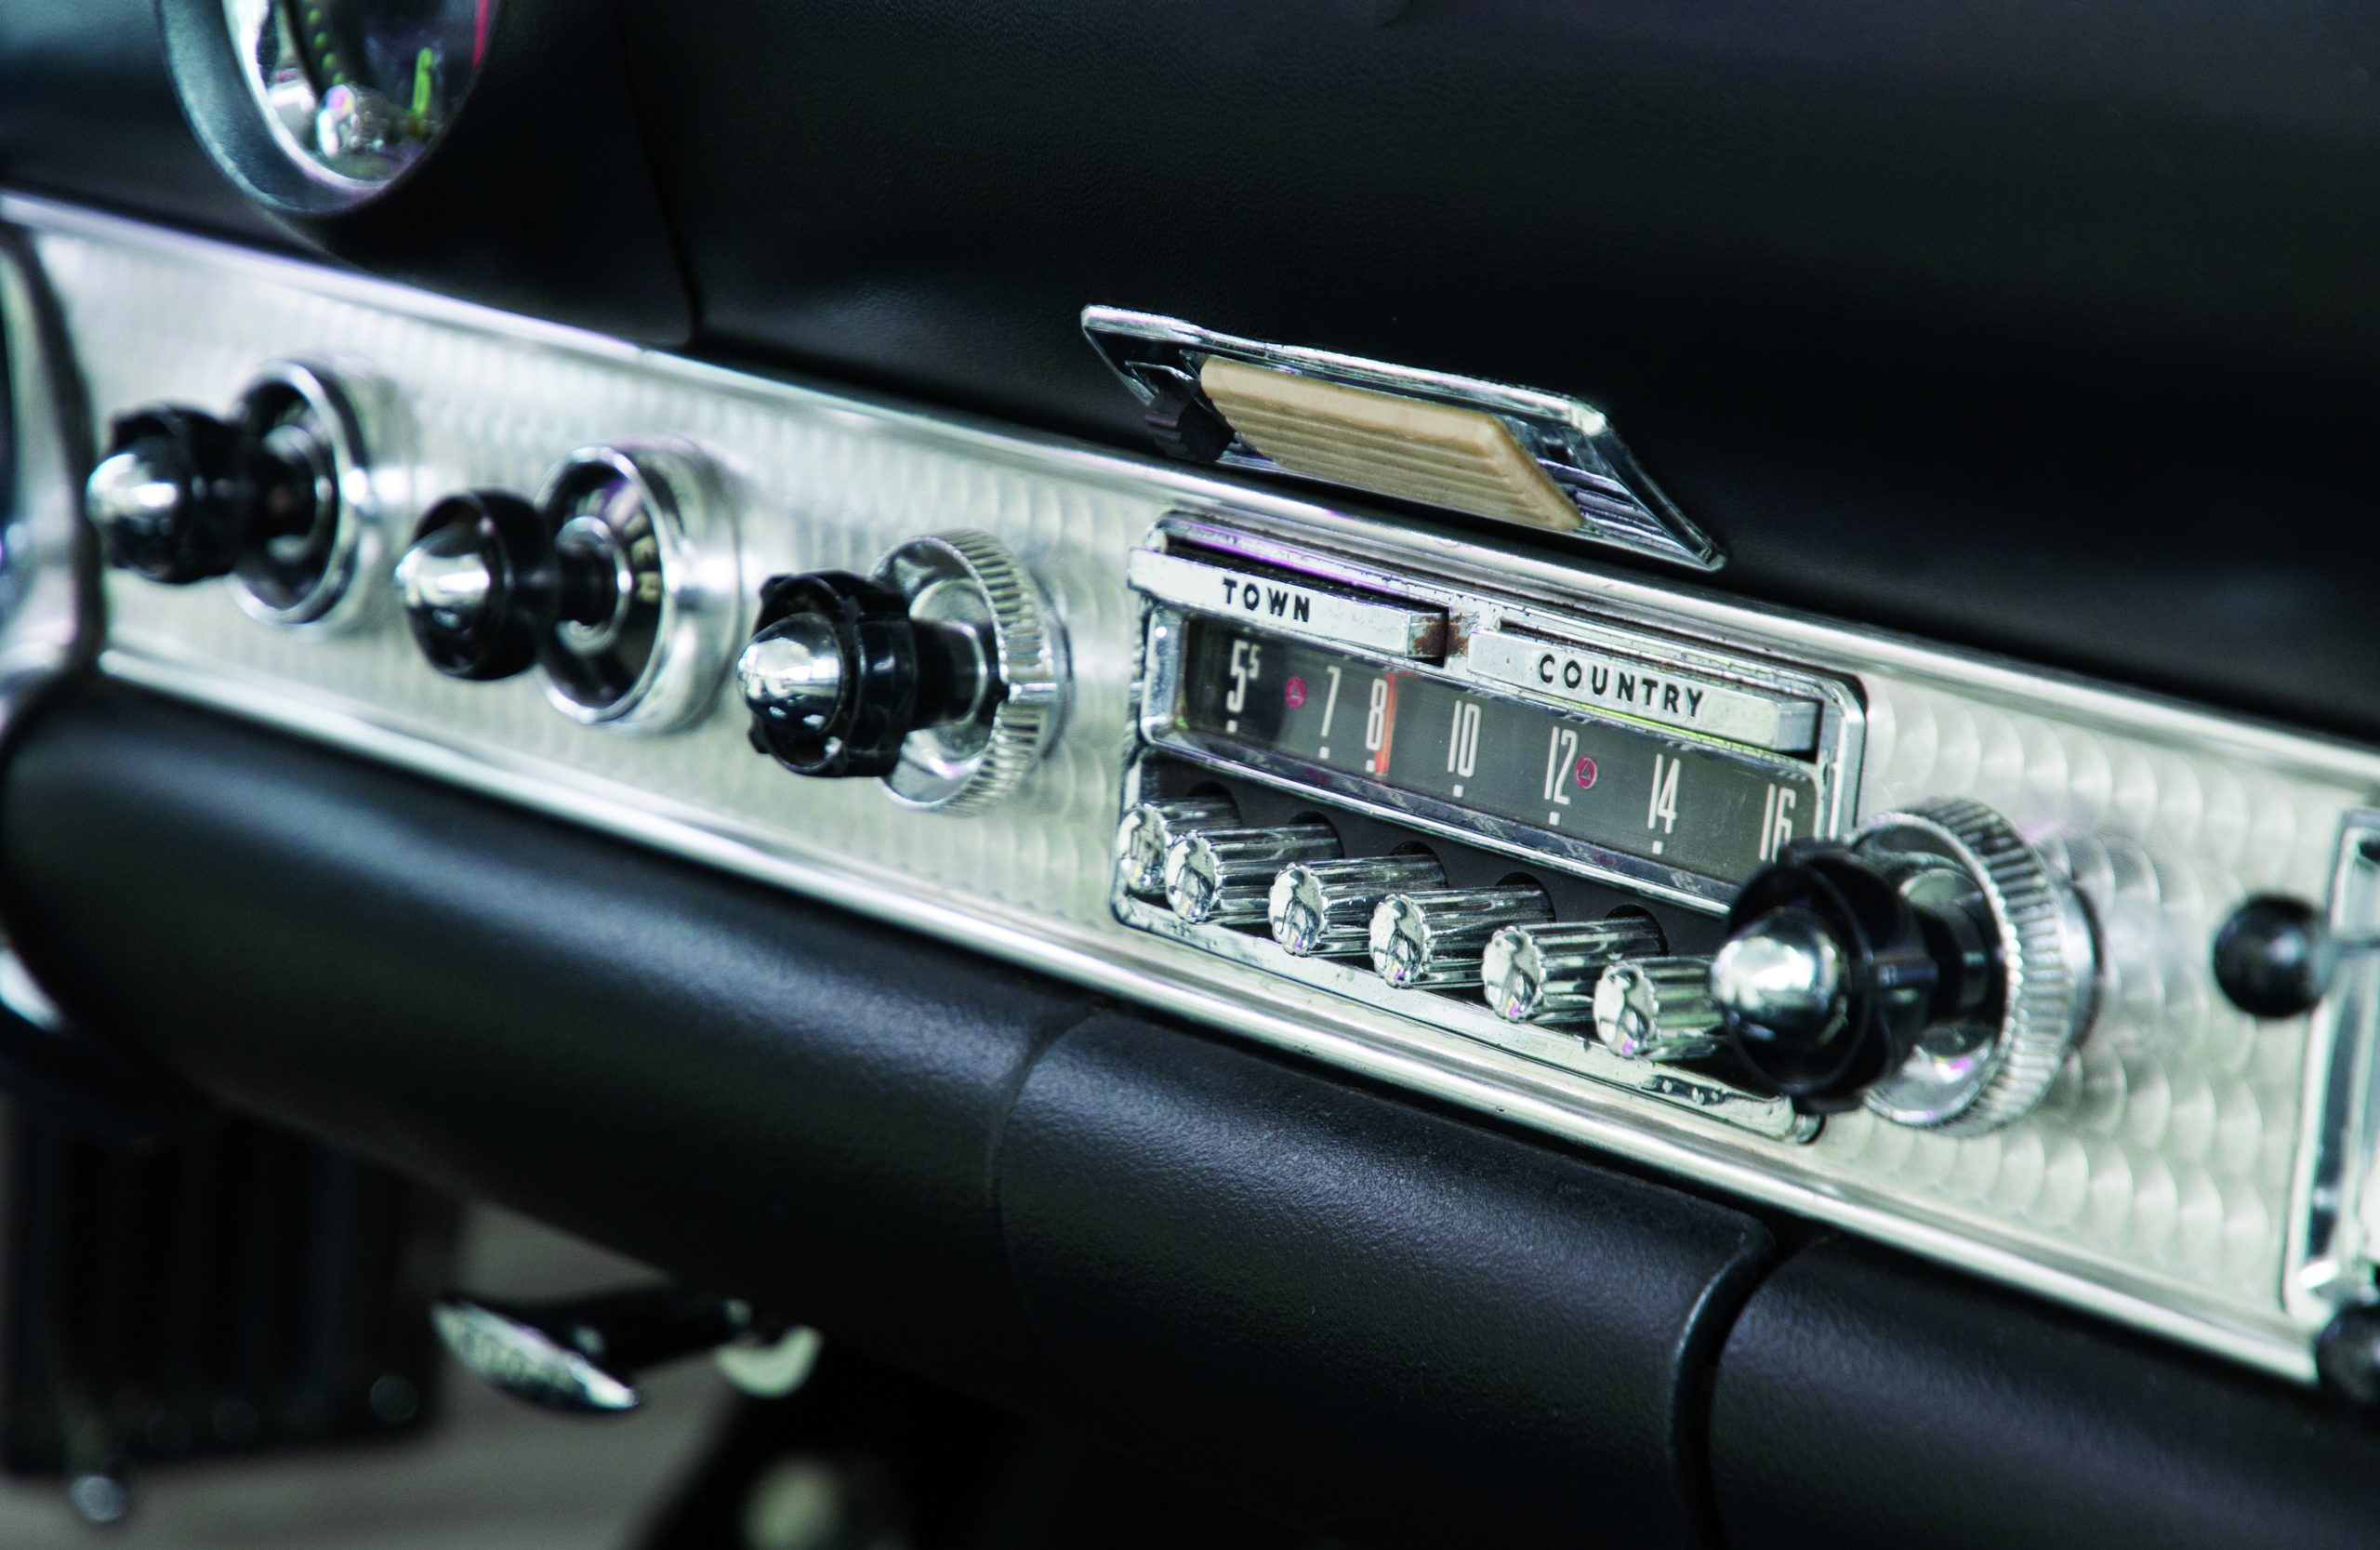 Radio in dashboard of vintage car